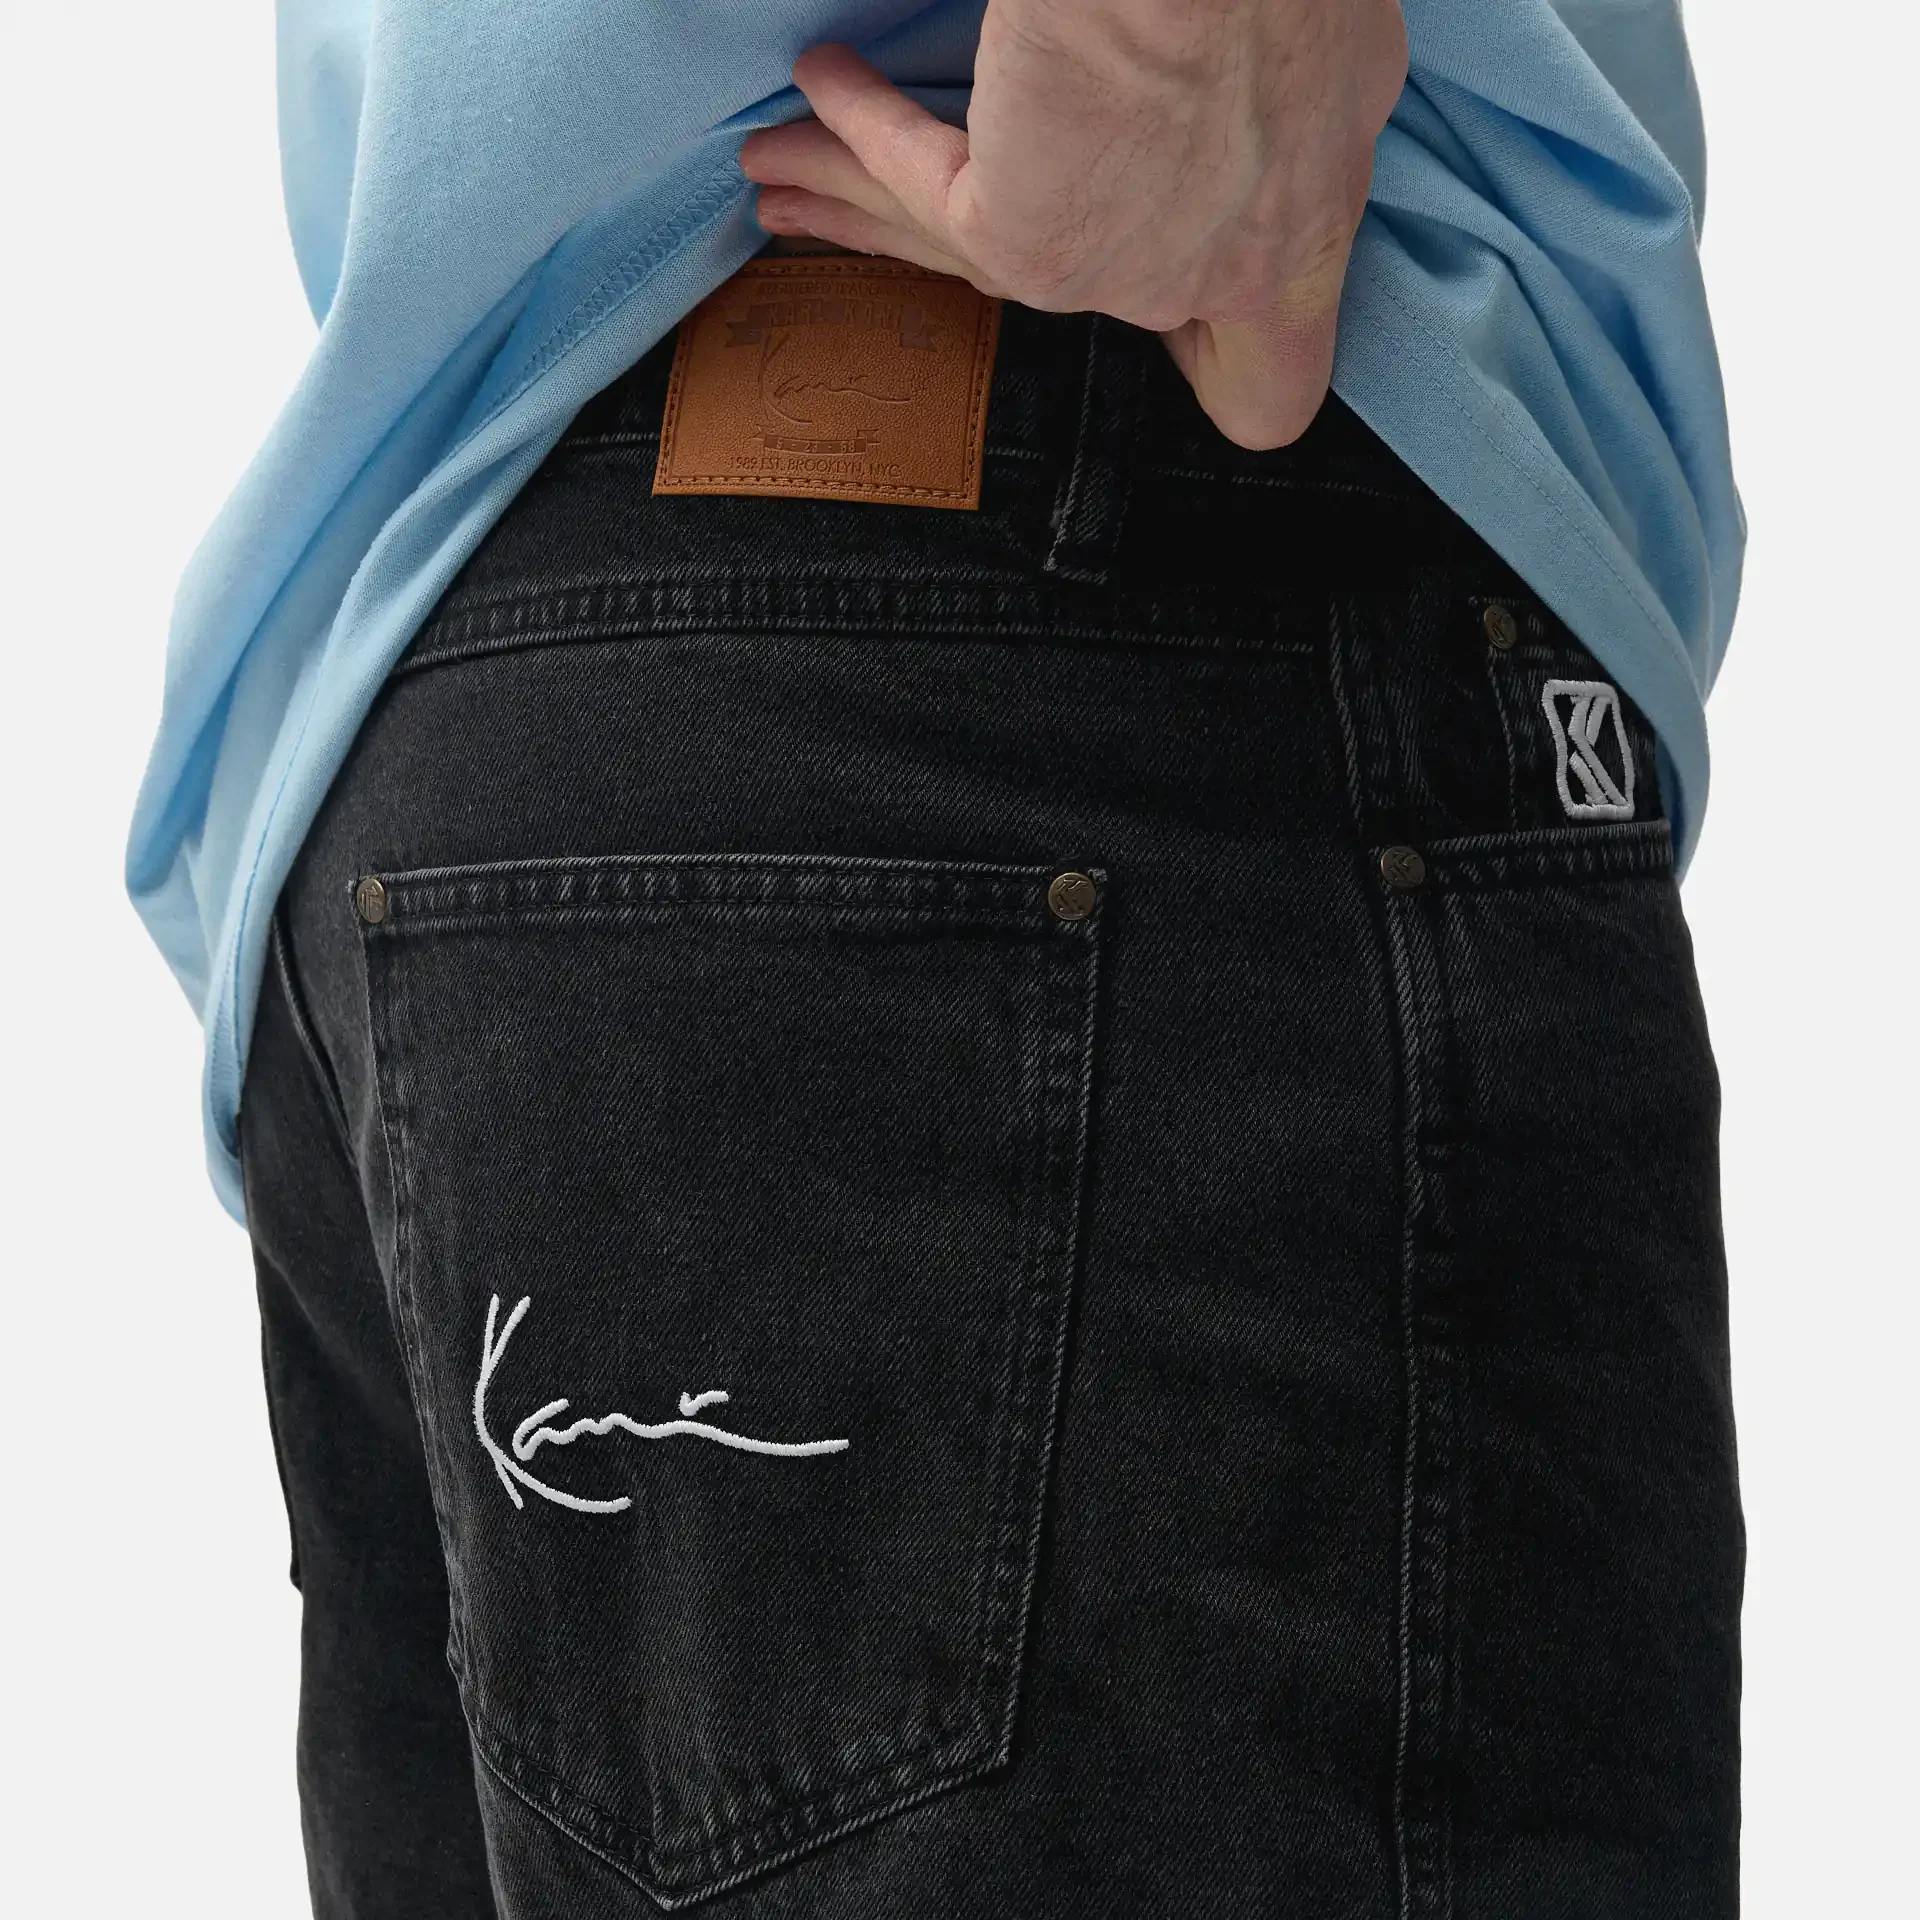 Karl Kani Small Signature Tapered Five Pocket Jeans Vintage Black